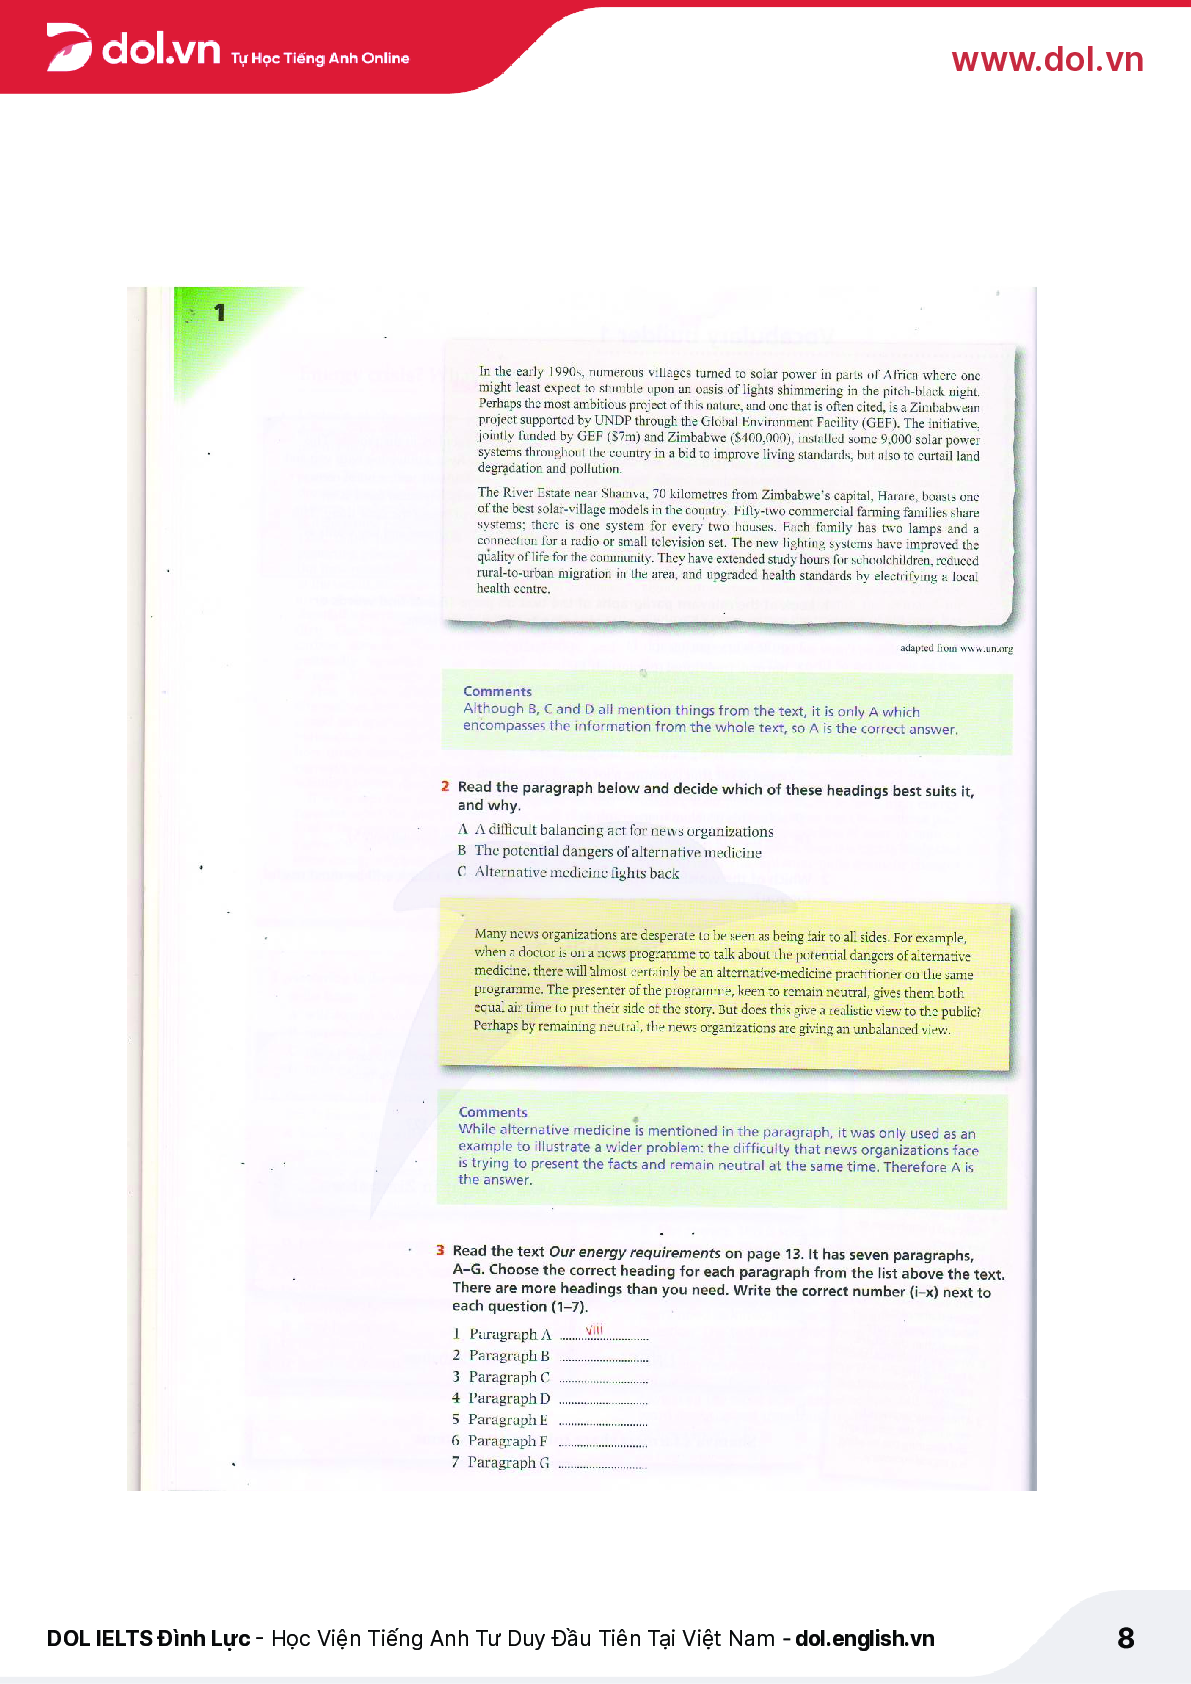 Sách IELTS Advantage Reading Skills pdf | Xem online, tải PDF miễn phí (trang 8)